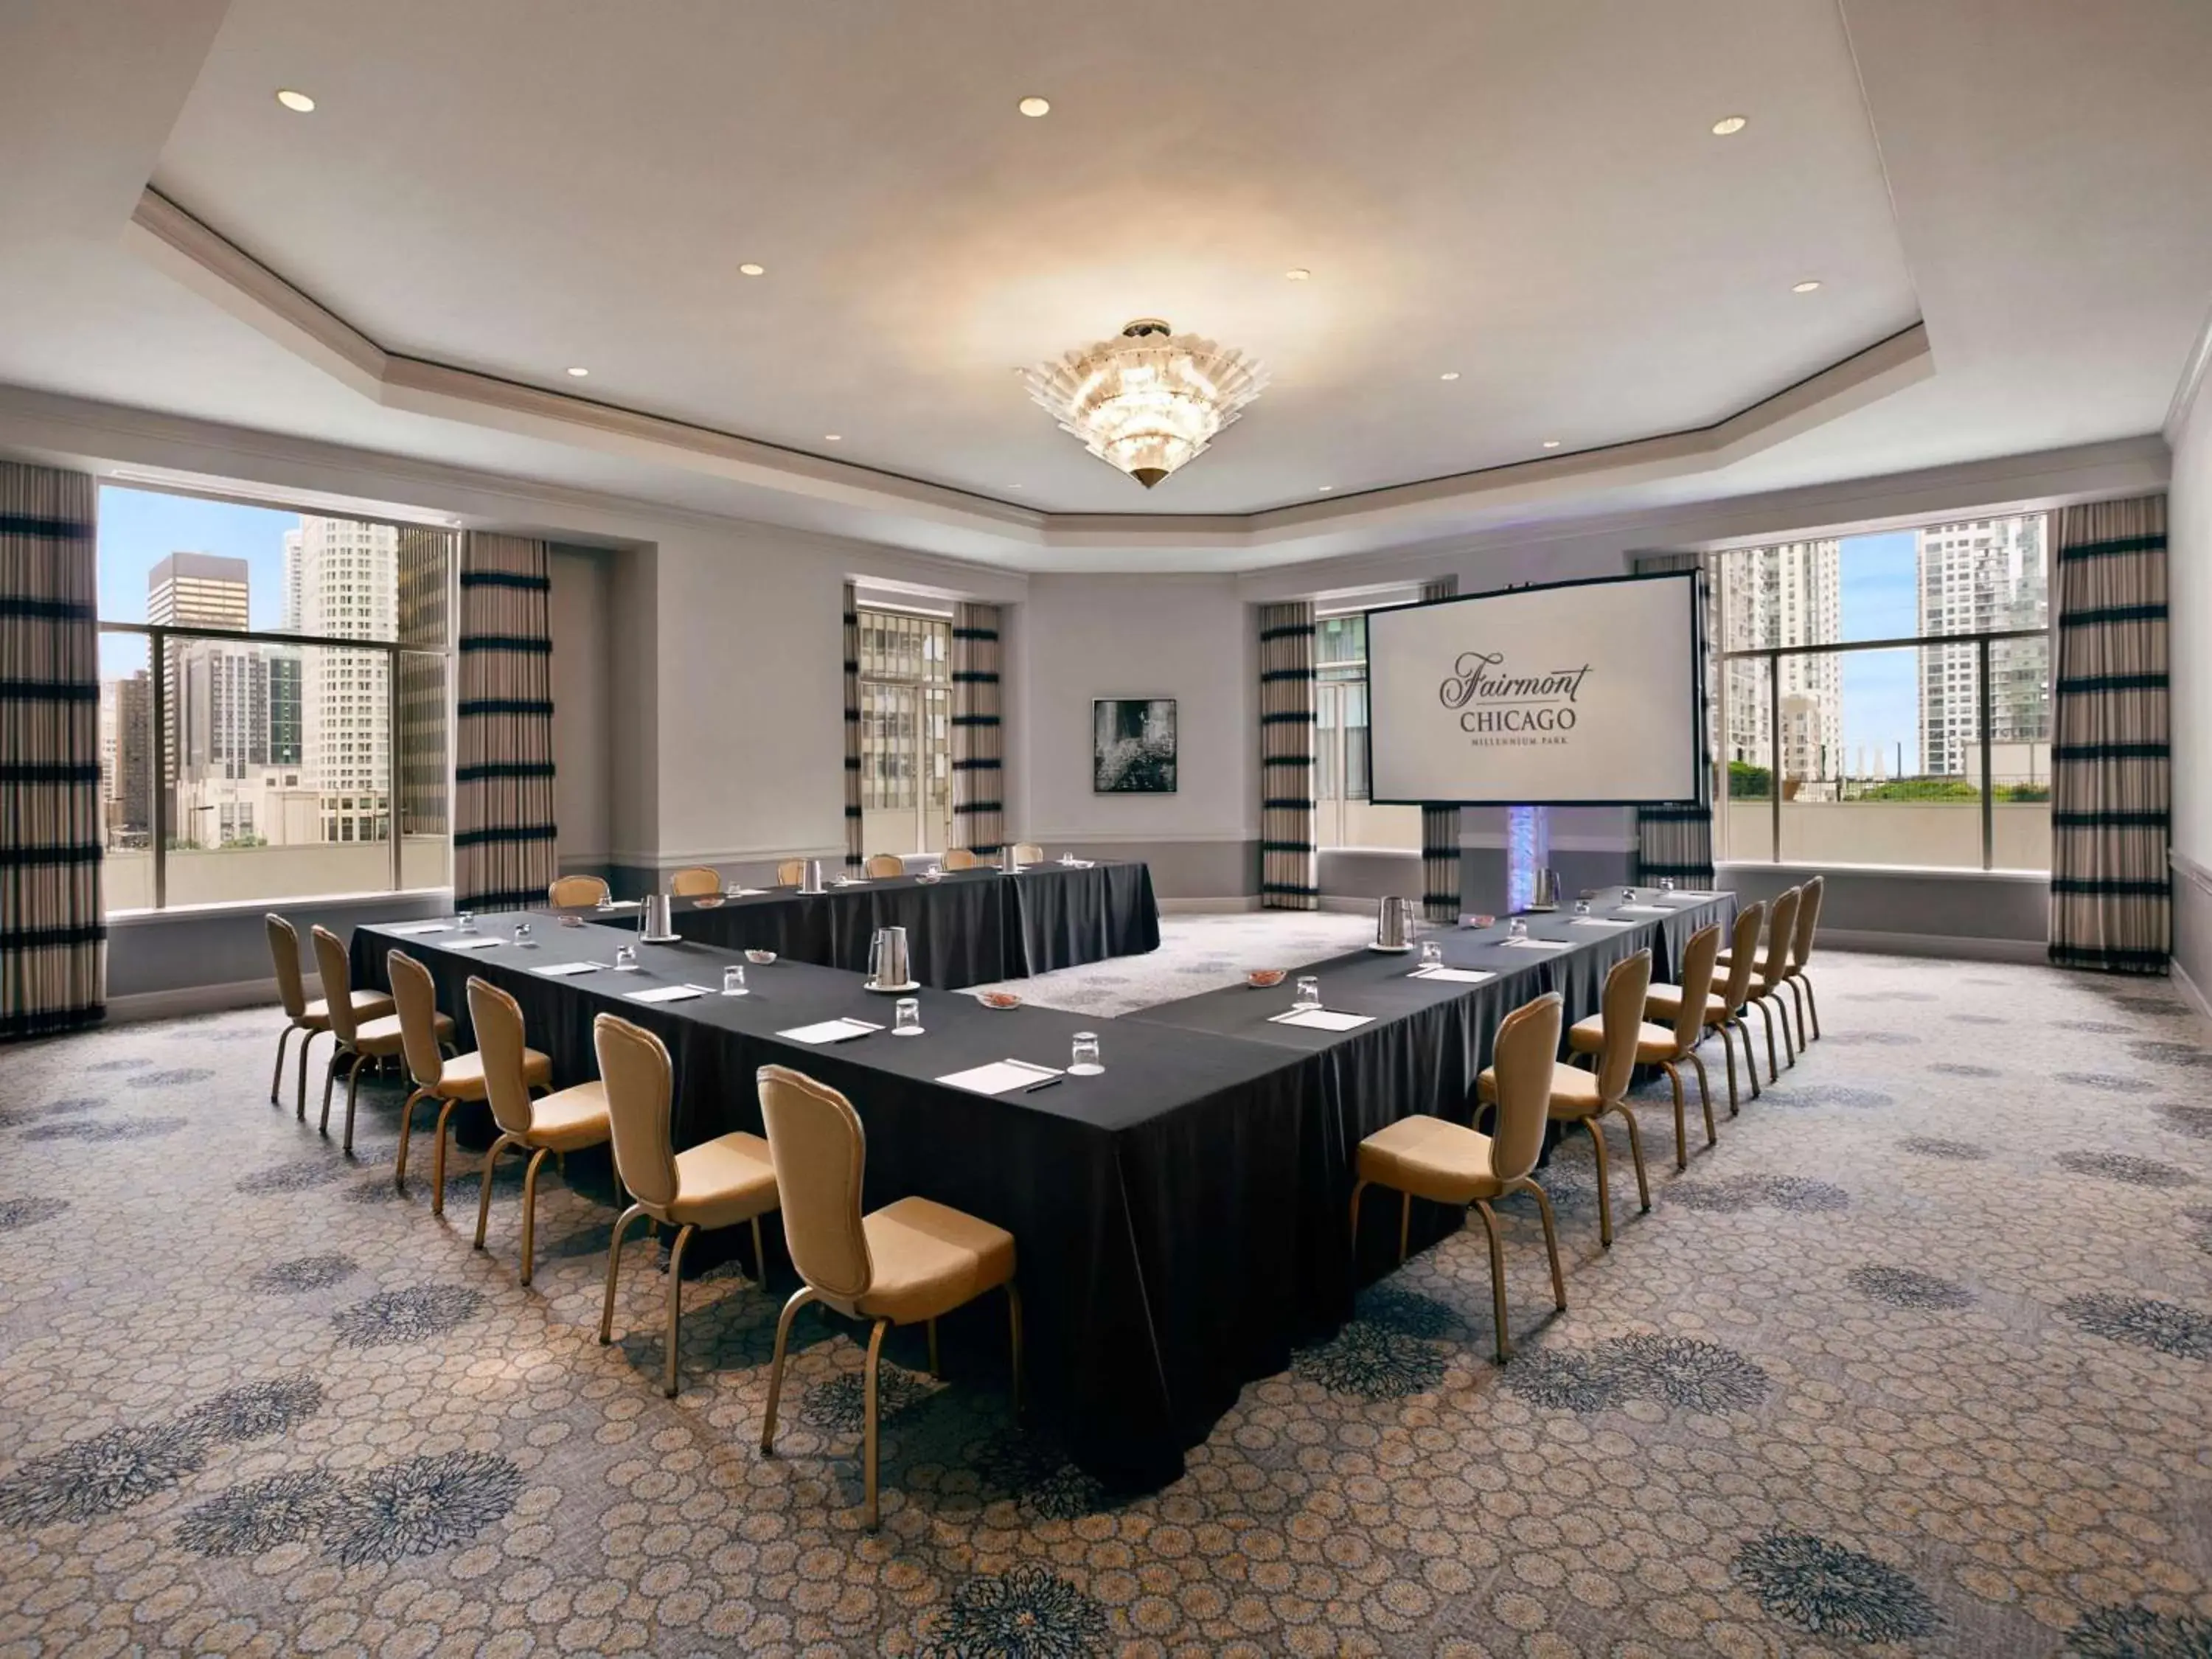 Meeting/conference room in Fairmont Chicago Millennium Park